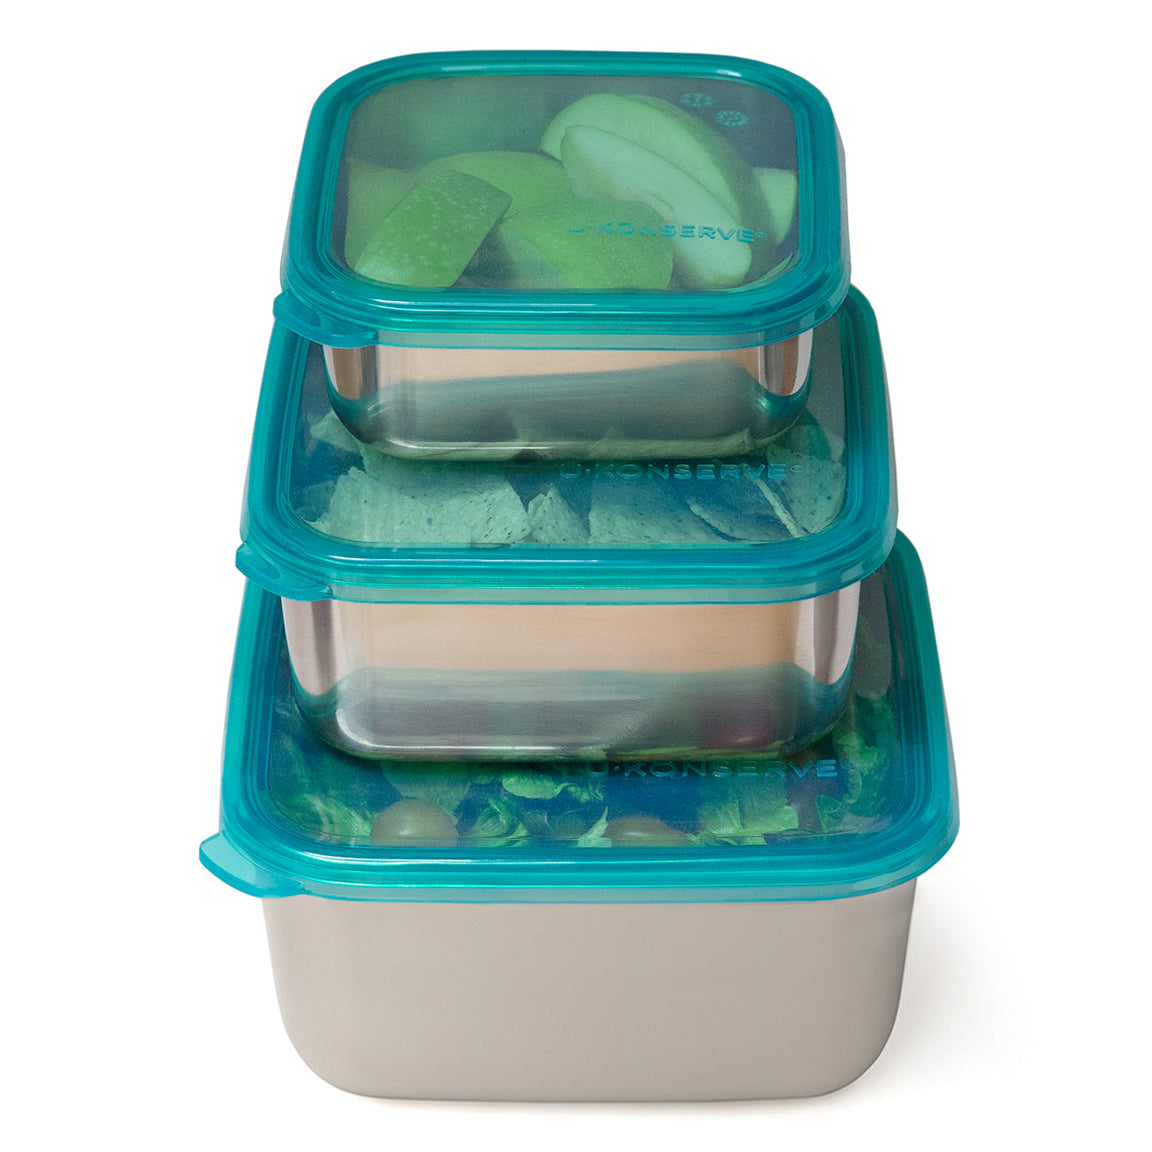 U Konserve Stainless Steel Food Storage Bento Box Container, Leak Proof Silicone Lid Dishwasher Safe - Plastic Free (30oz Blue)